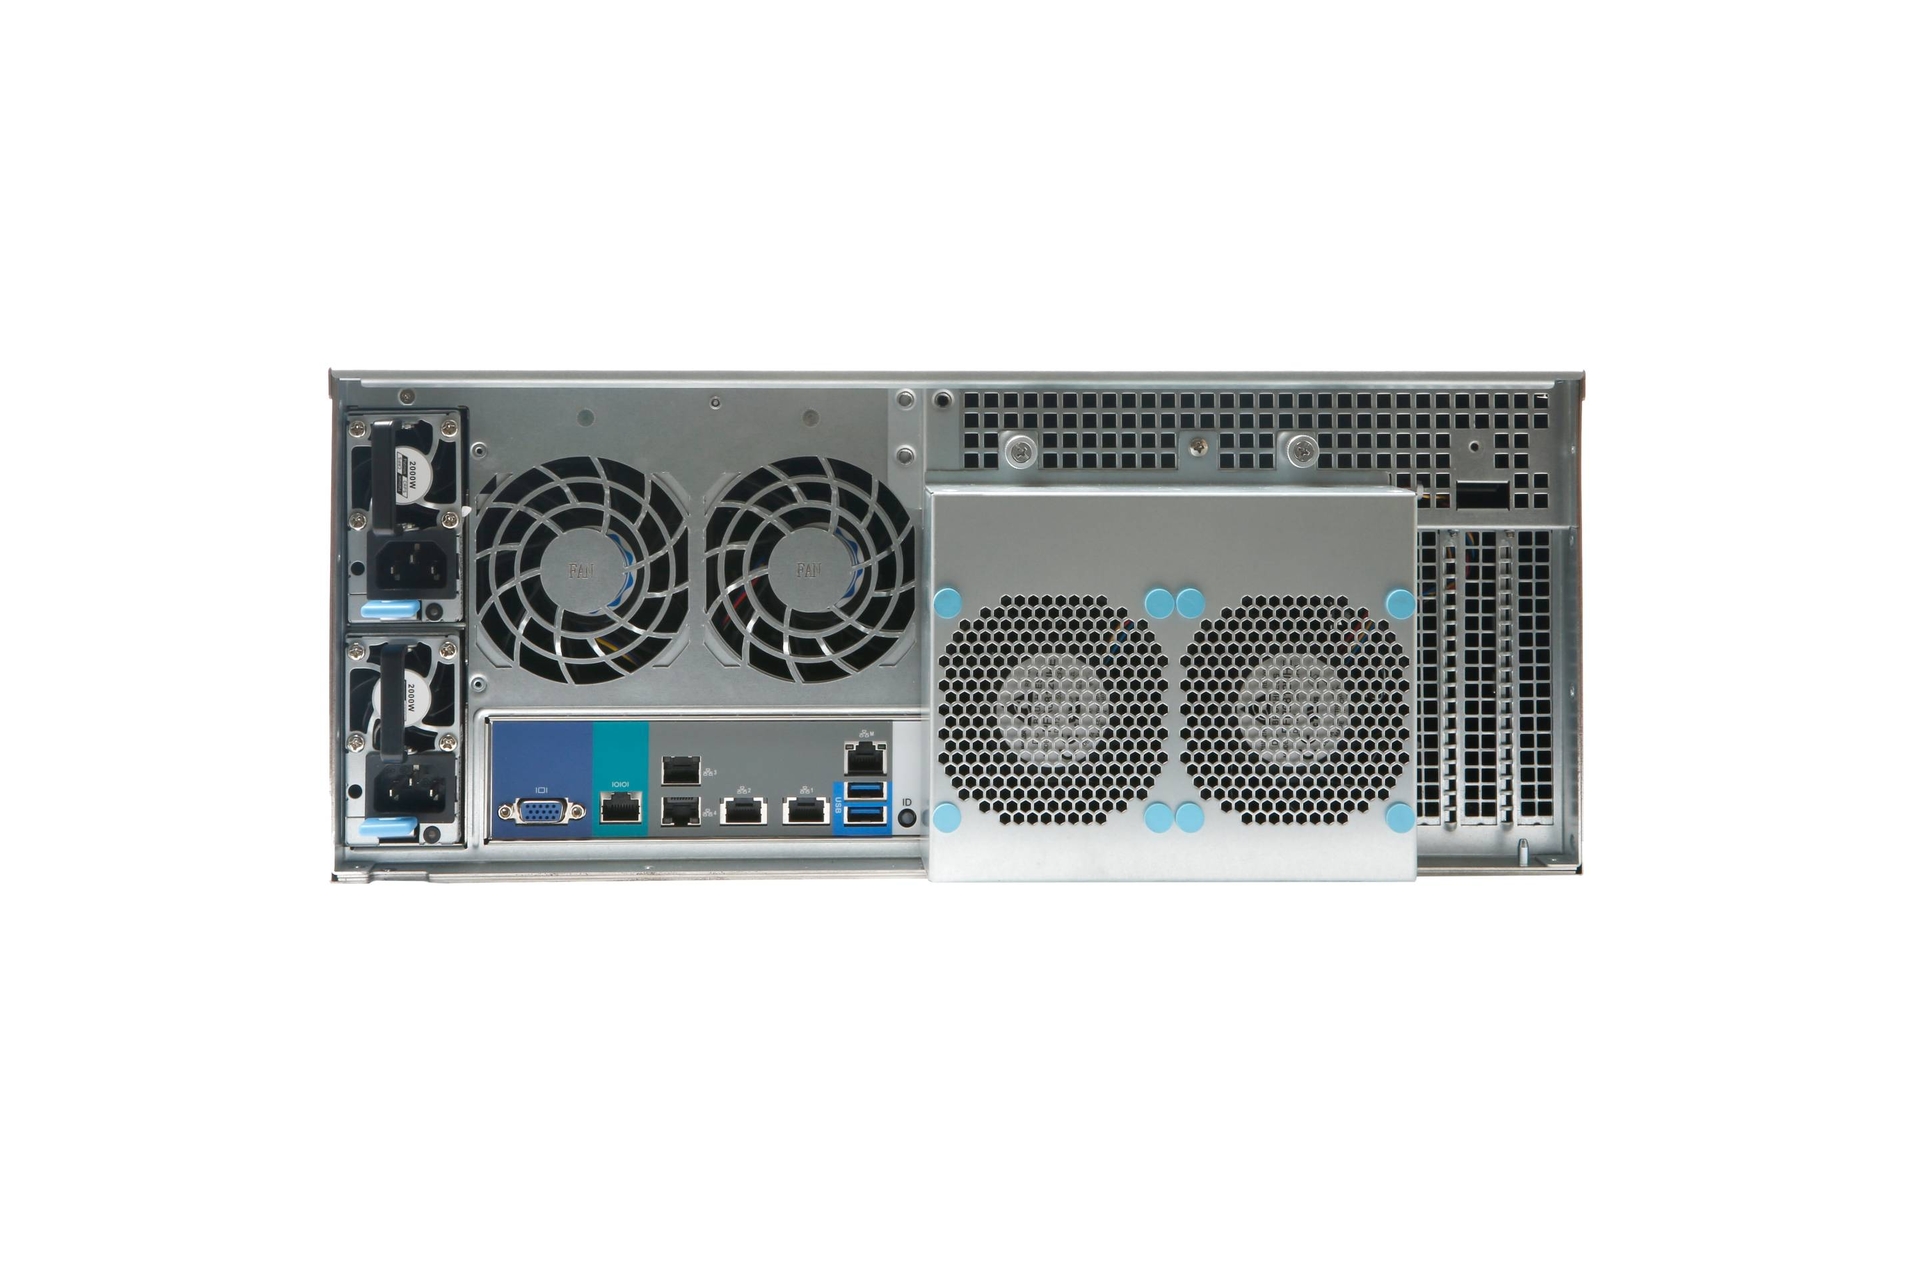 ZOTAC 4U Dual Intel CPU Rack Mount GPU Server (barebone) - ZRS-3210M4